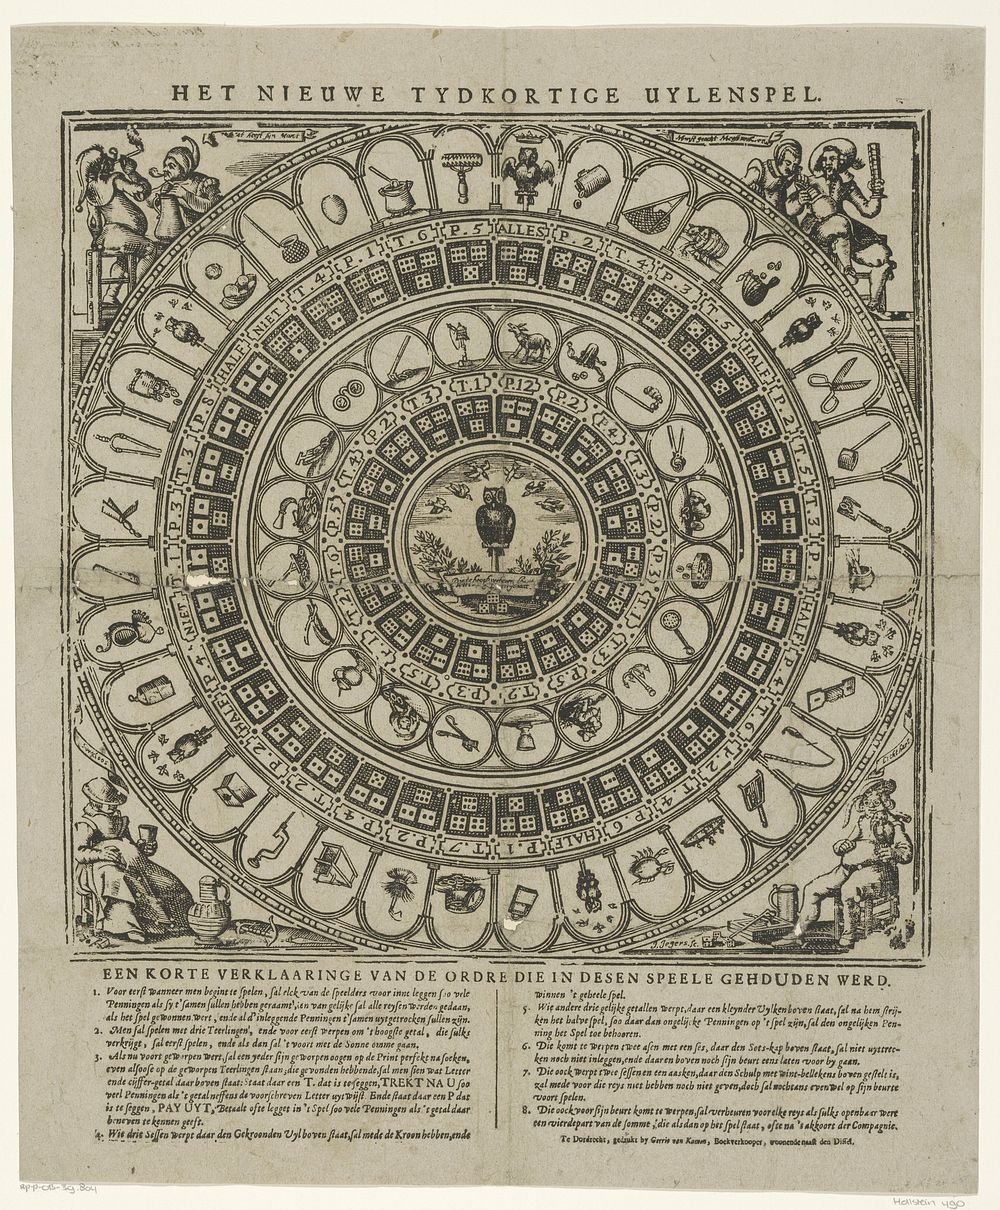 Het nieuwe tydkortige uylenspel (1628 - 1667) by Jan Christoffel Jegher and Gerrit van Kamen